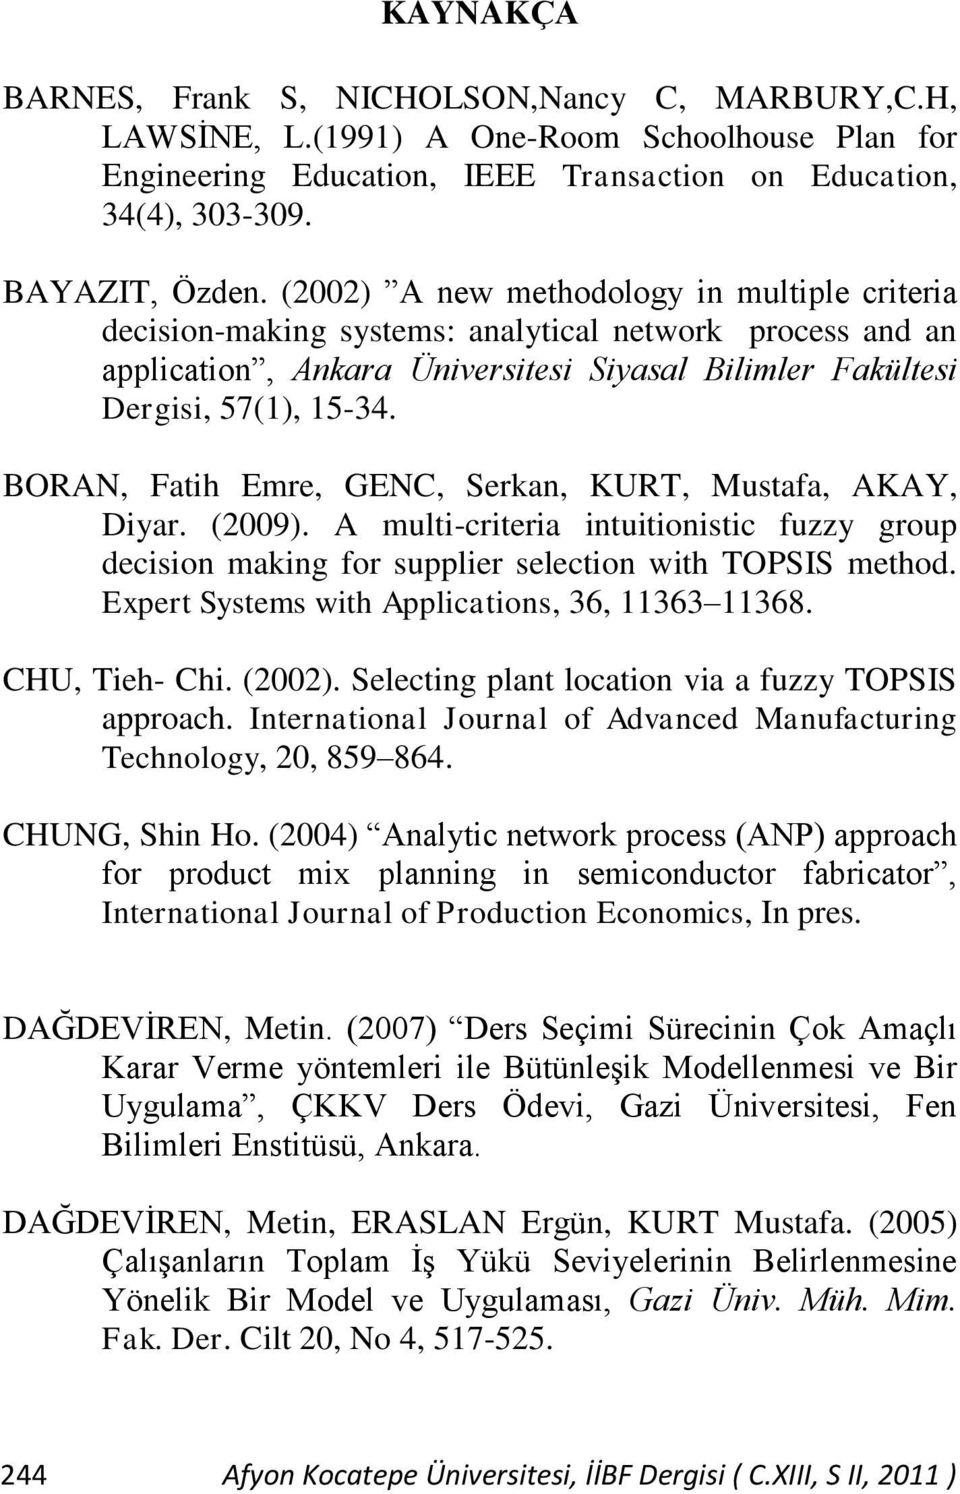 BORAN, Fatih Emre, GENC, Serkan, KURT, Mustafa, AKAY, Diyar. (2009). A multi-criteria intuitionistic fuzzy group decision making for supplier selection with TOPSIS method.